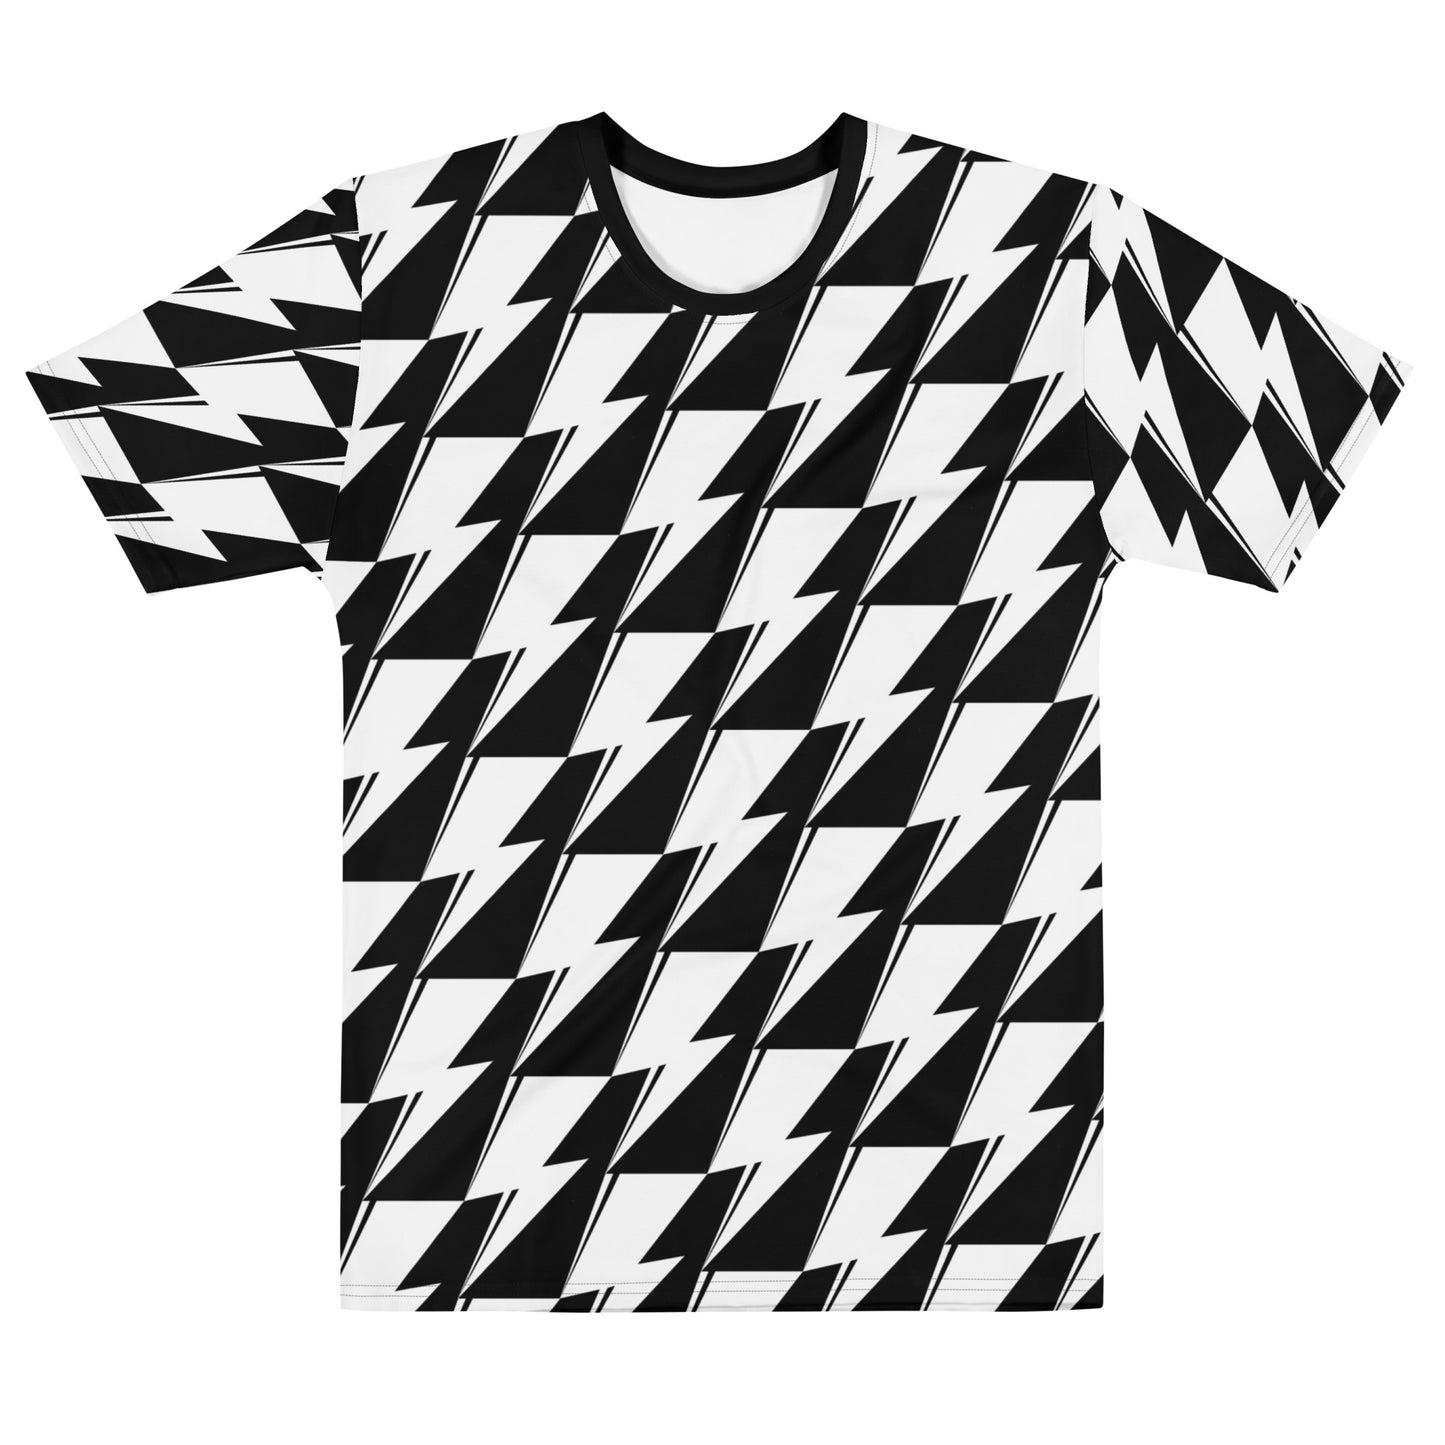 SVOLTA B/W Houndstooth Bolt Unisex T-shirt, XS-XL - Adult